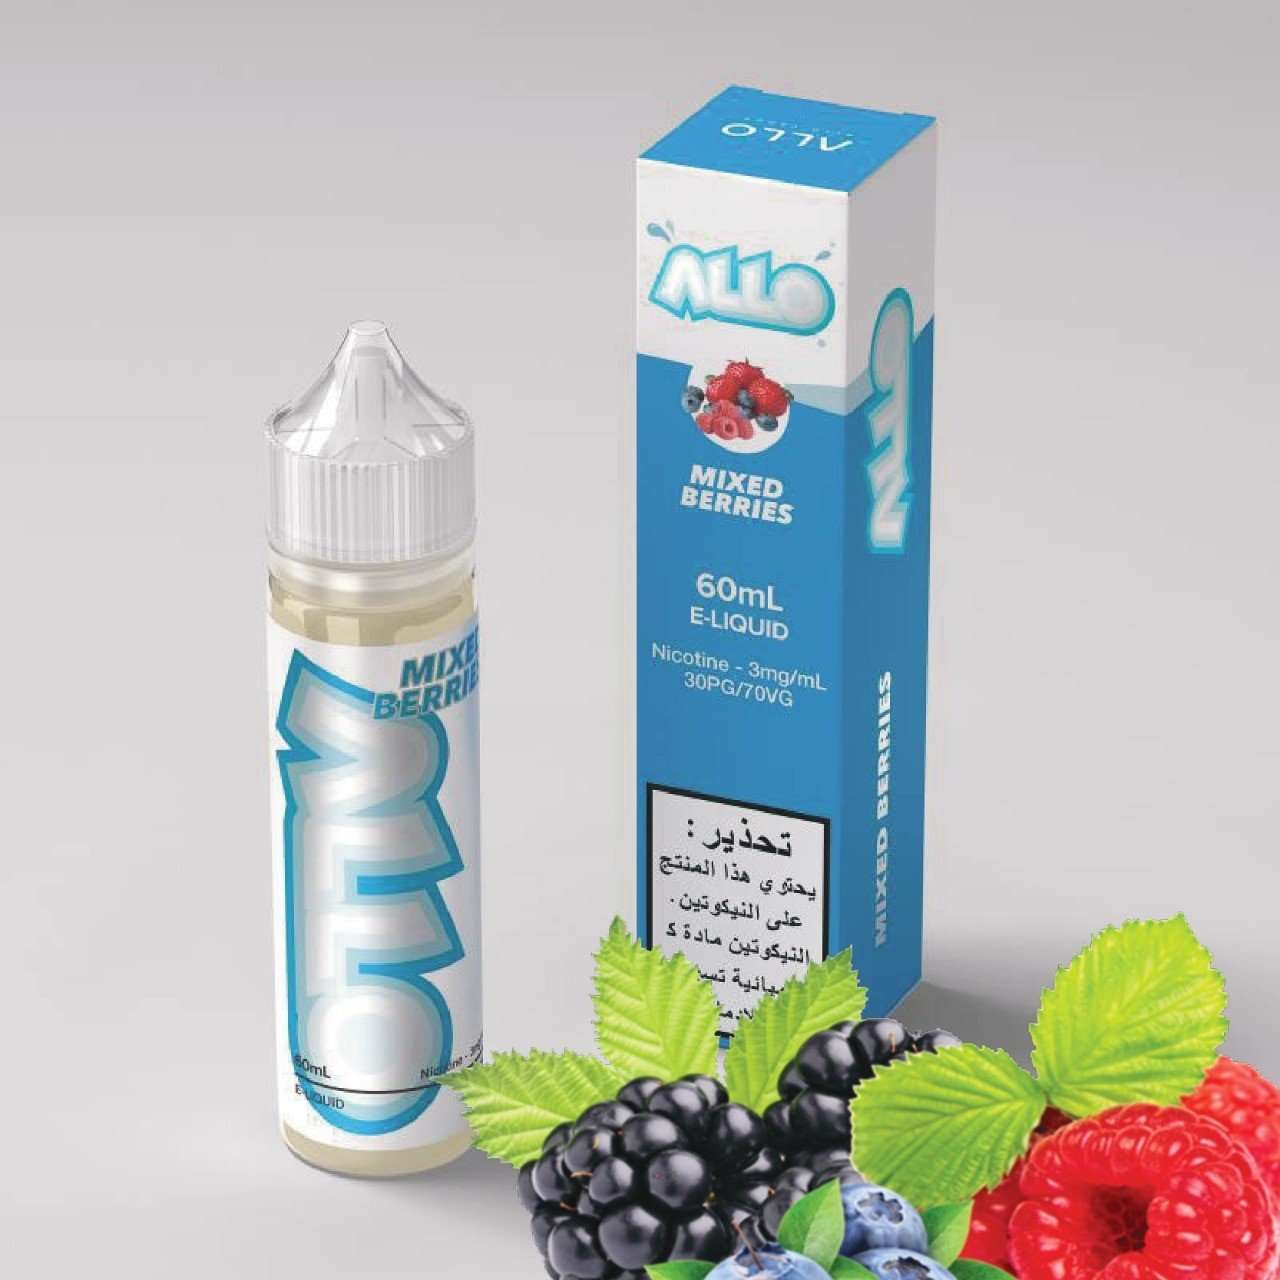 Vape e-liquid Allo brand Mixed berris 60ml 3mg